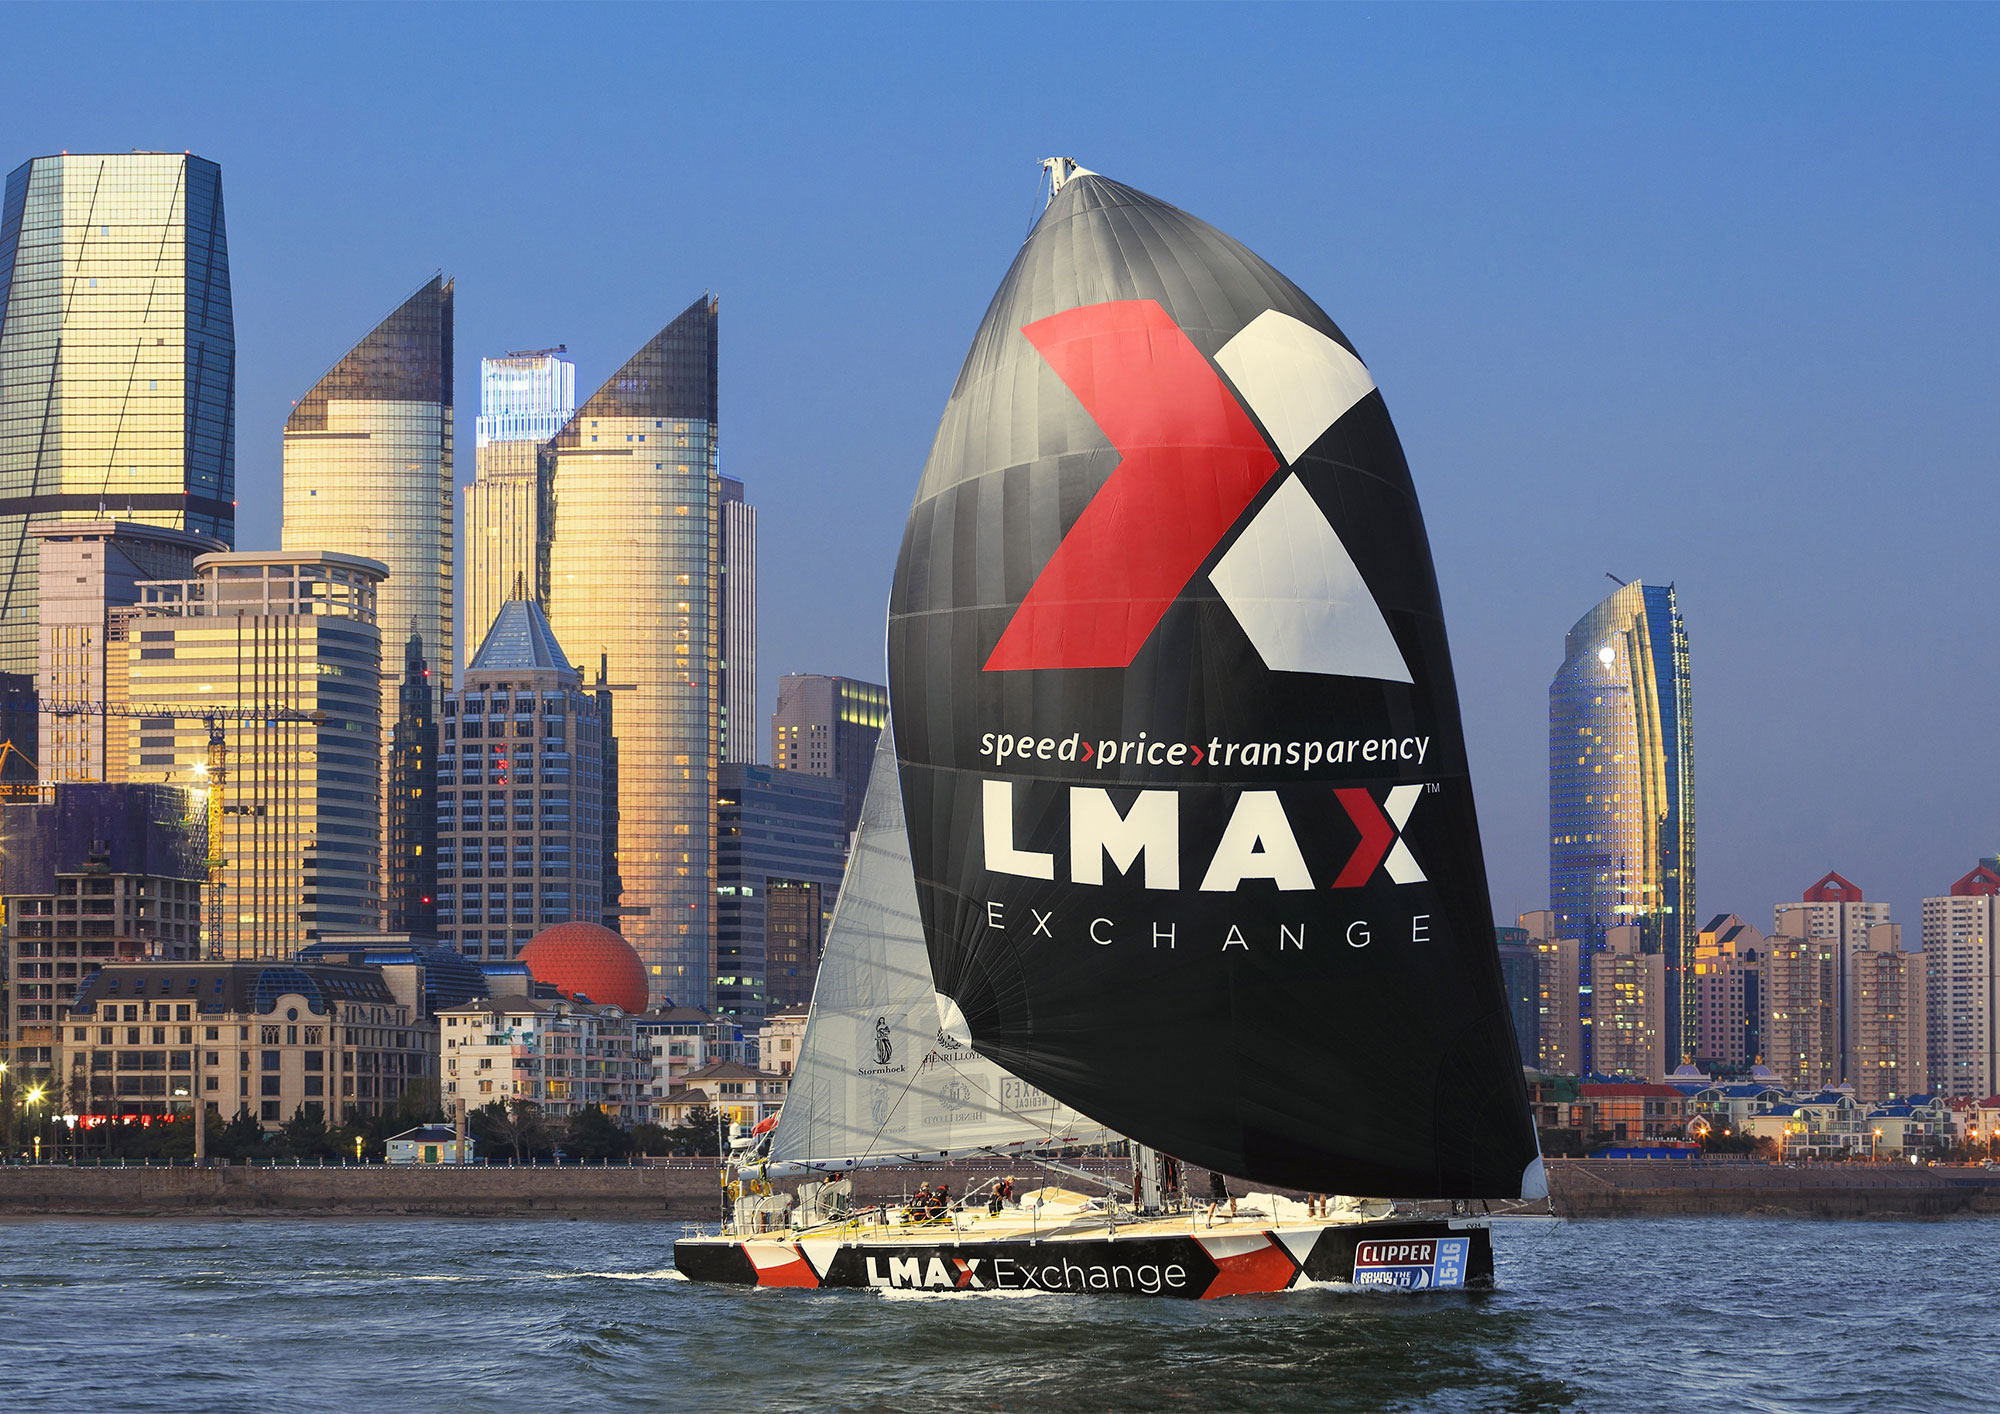 LMAX Digital报告客户大量涌入-第1张图片